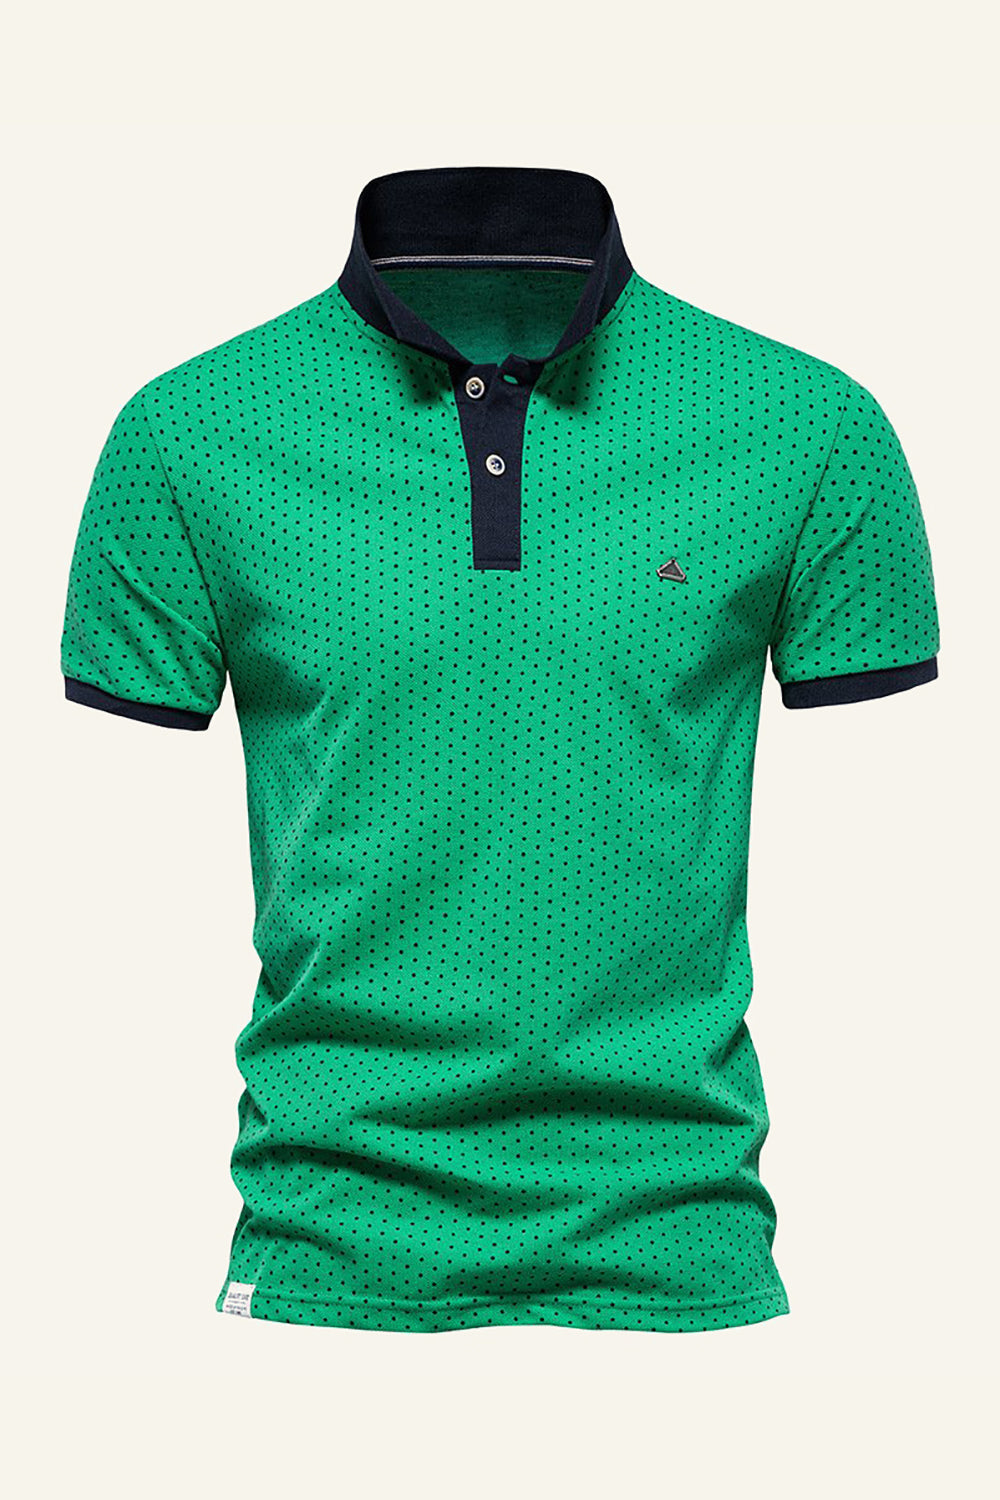 Klassisches grünes Normale Passform Polka Dots Herren Poloshirt mit Kragen